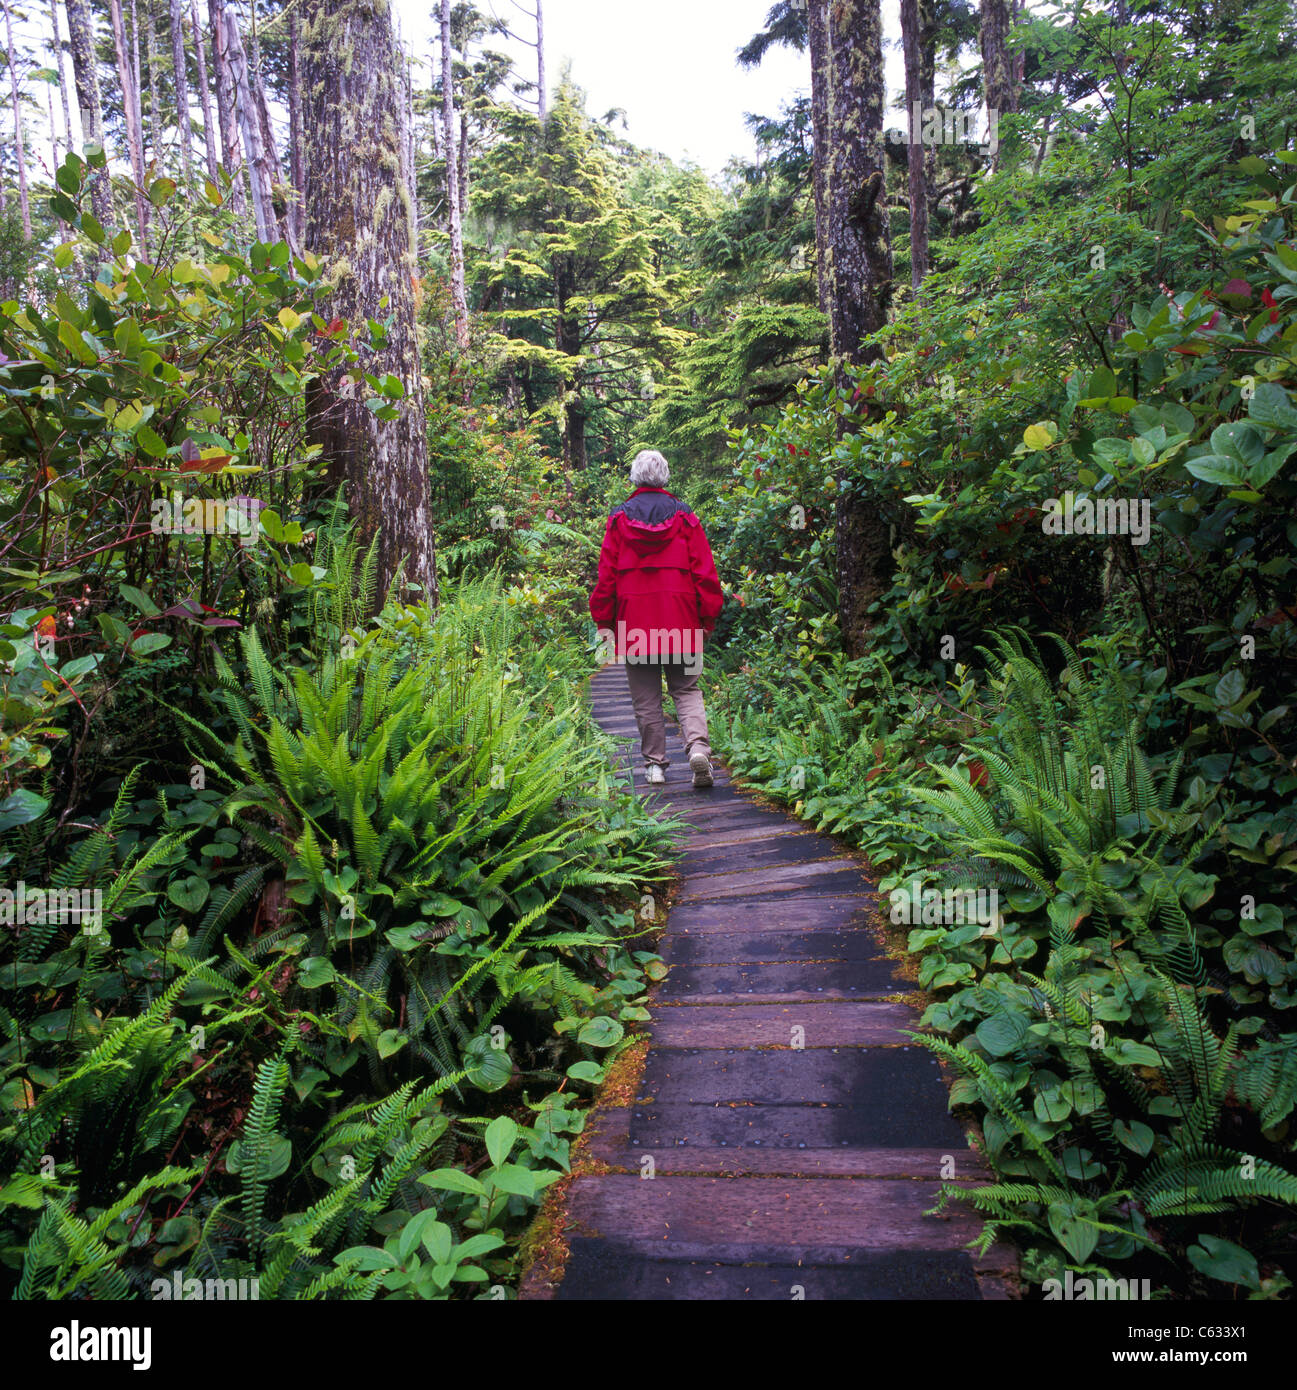 Vancouver Island, BC, Britisch-Kolumbien, Kanada - Wanderer Wandern am Boardwalk Trail in gemäßigten Regenwald nahe Ucluelet Stockfoto